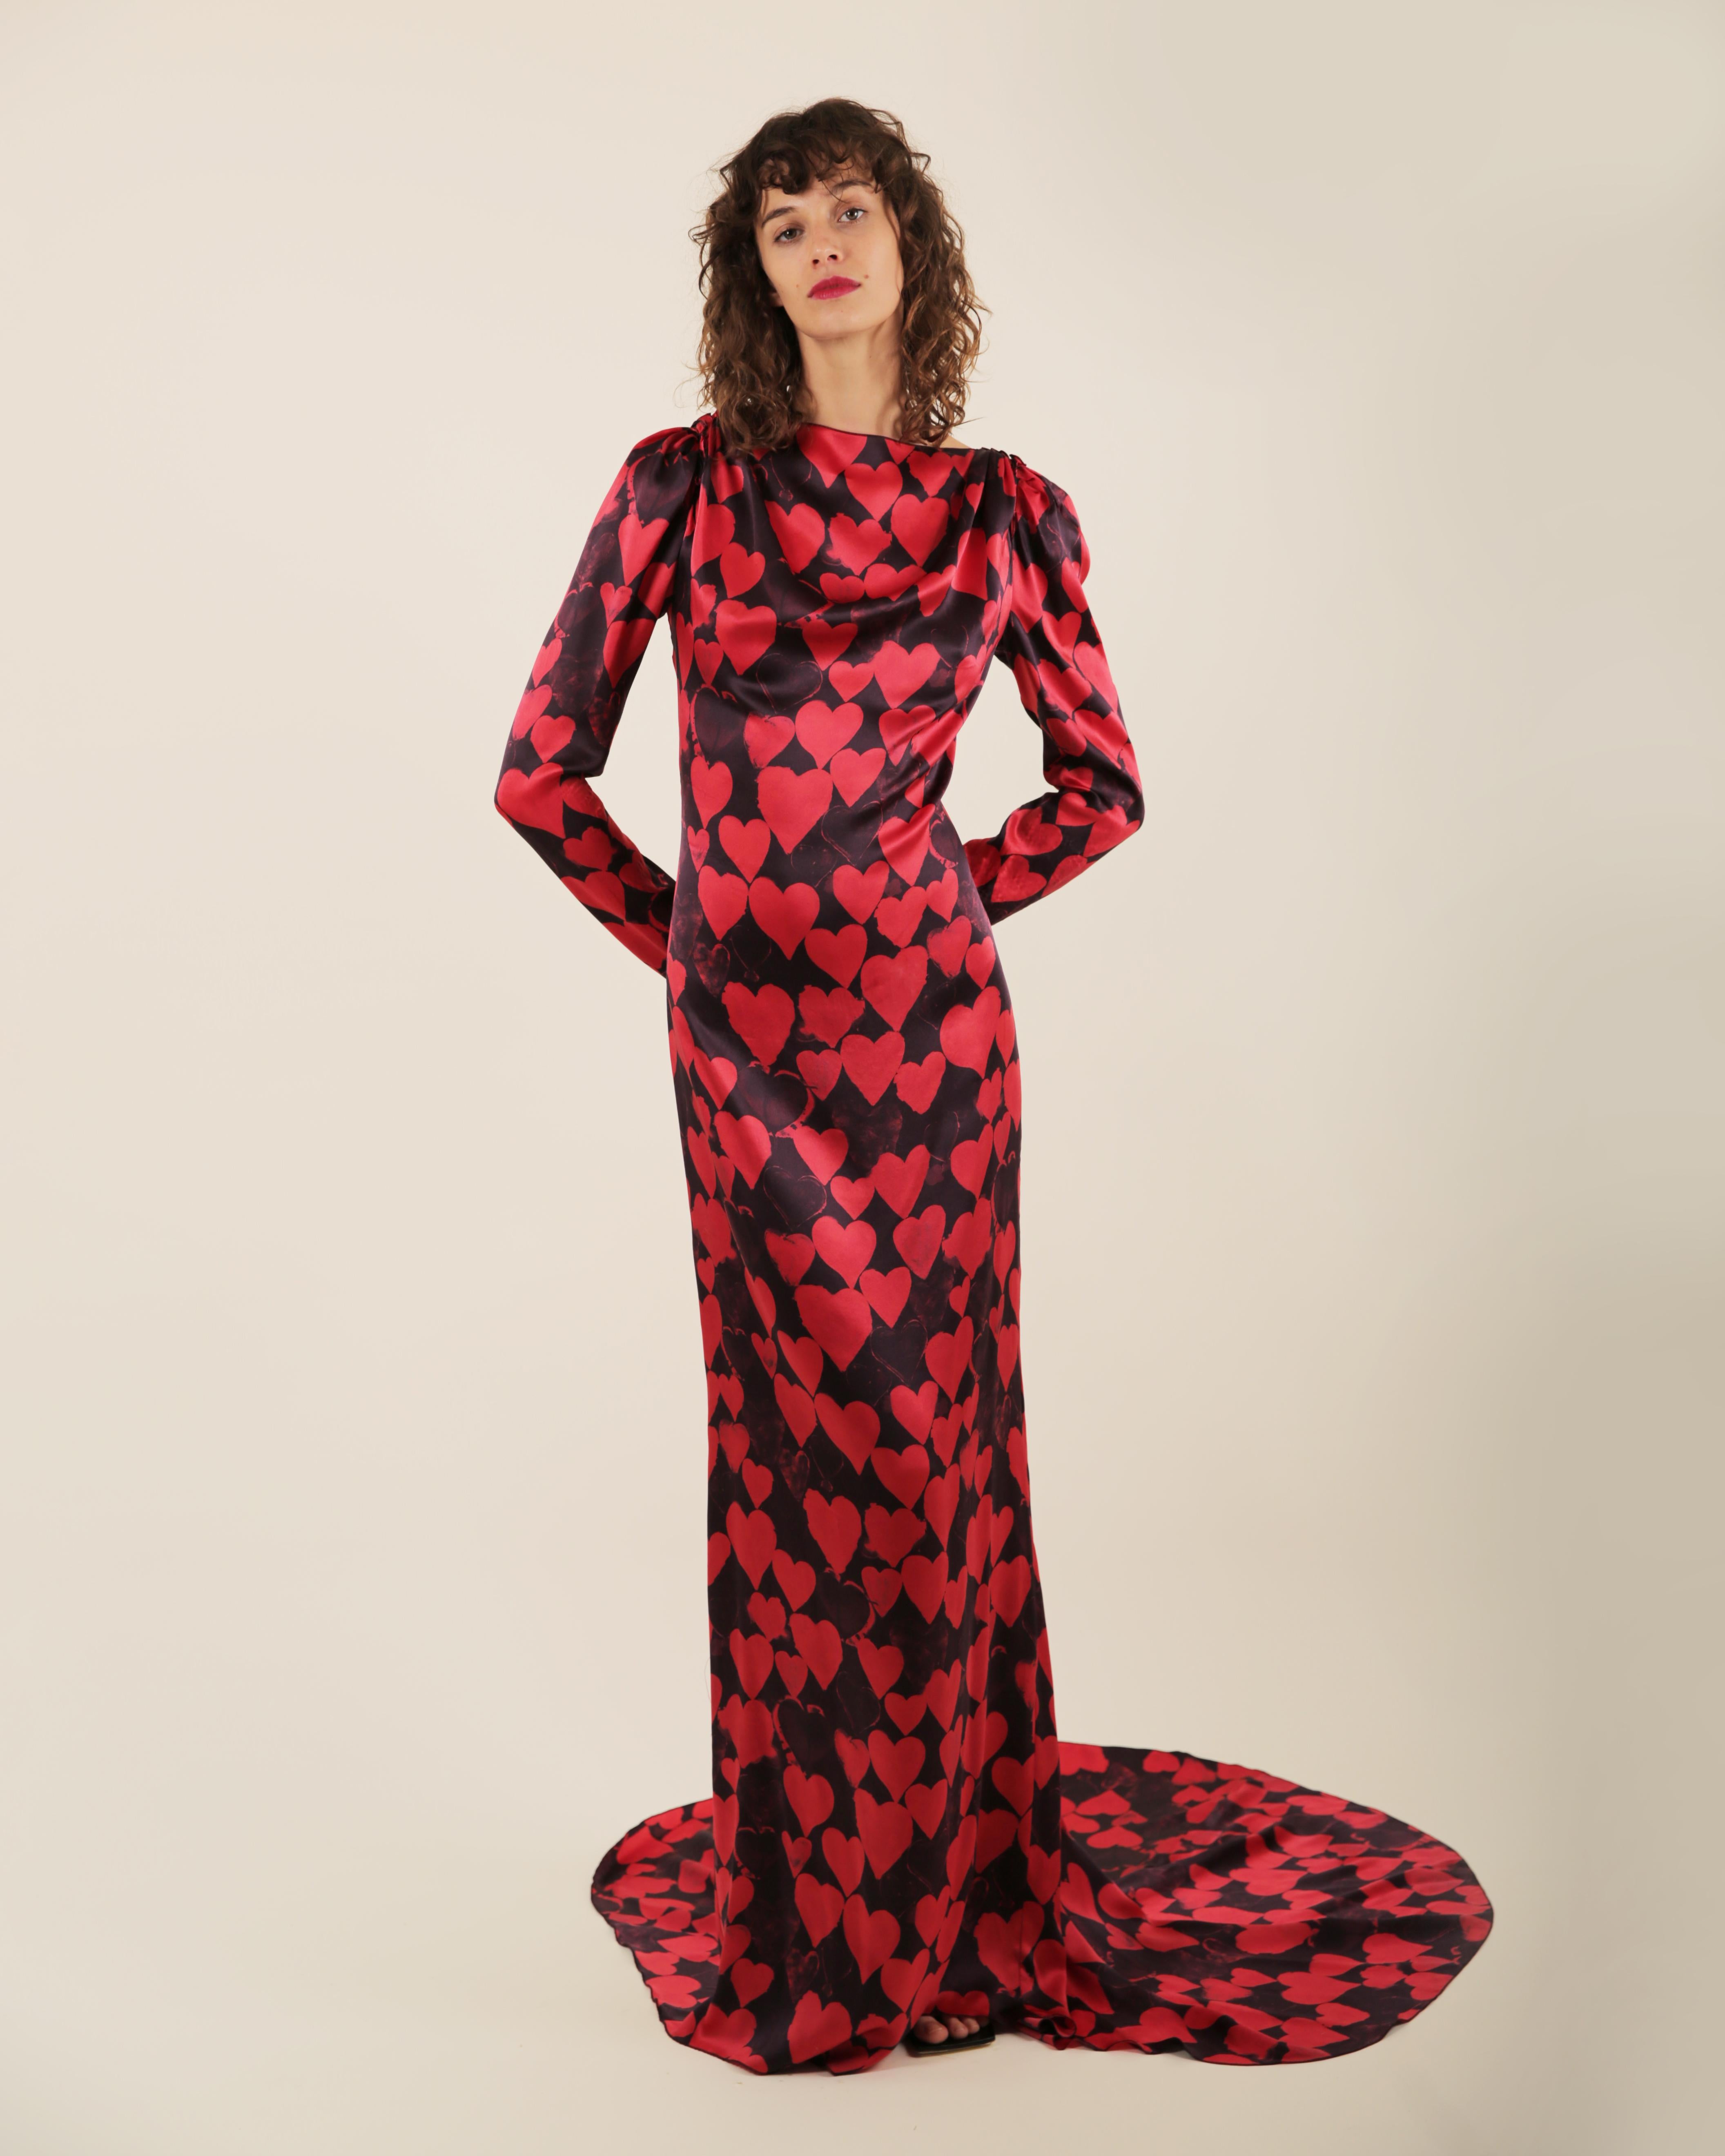 Women's Lanvin pre/FW 2012 10 yr anniversary black red heart print silk train gown dress For Sale